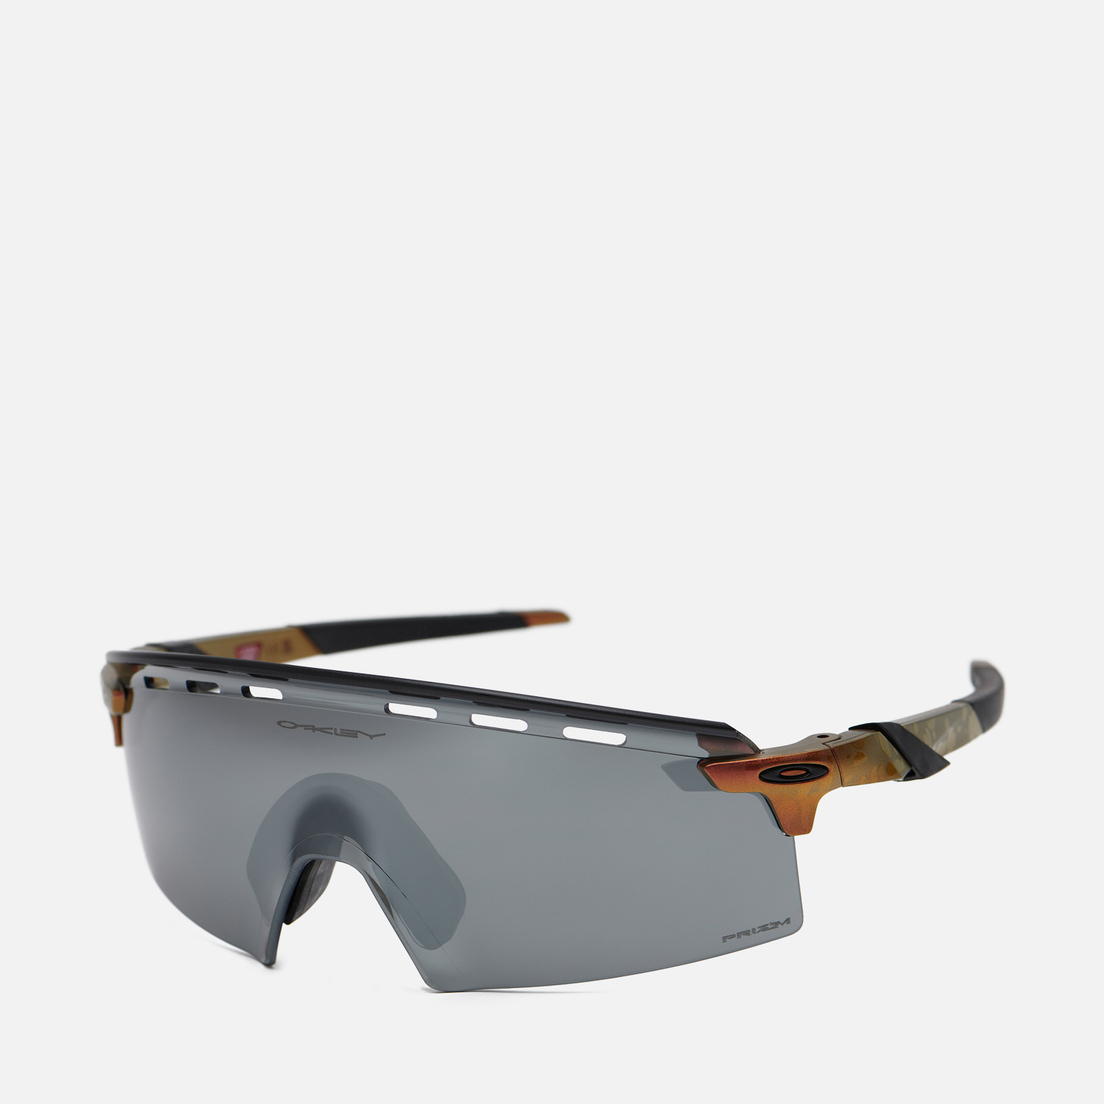 Oakley Солнцезащитные очки Encoder Strike Community Collection